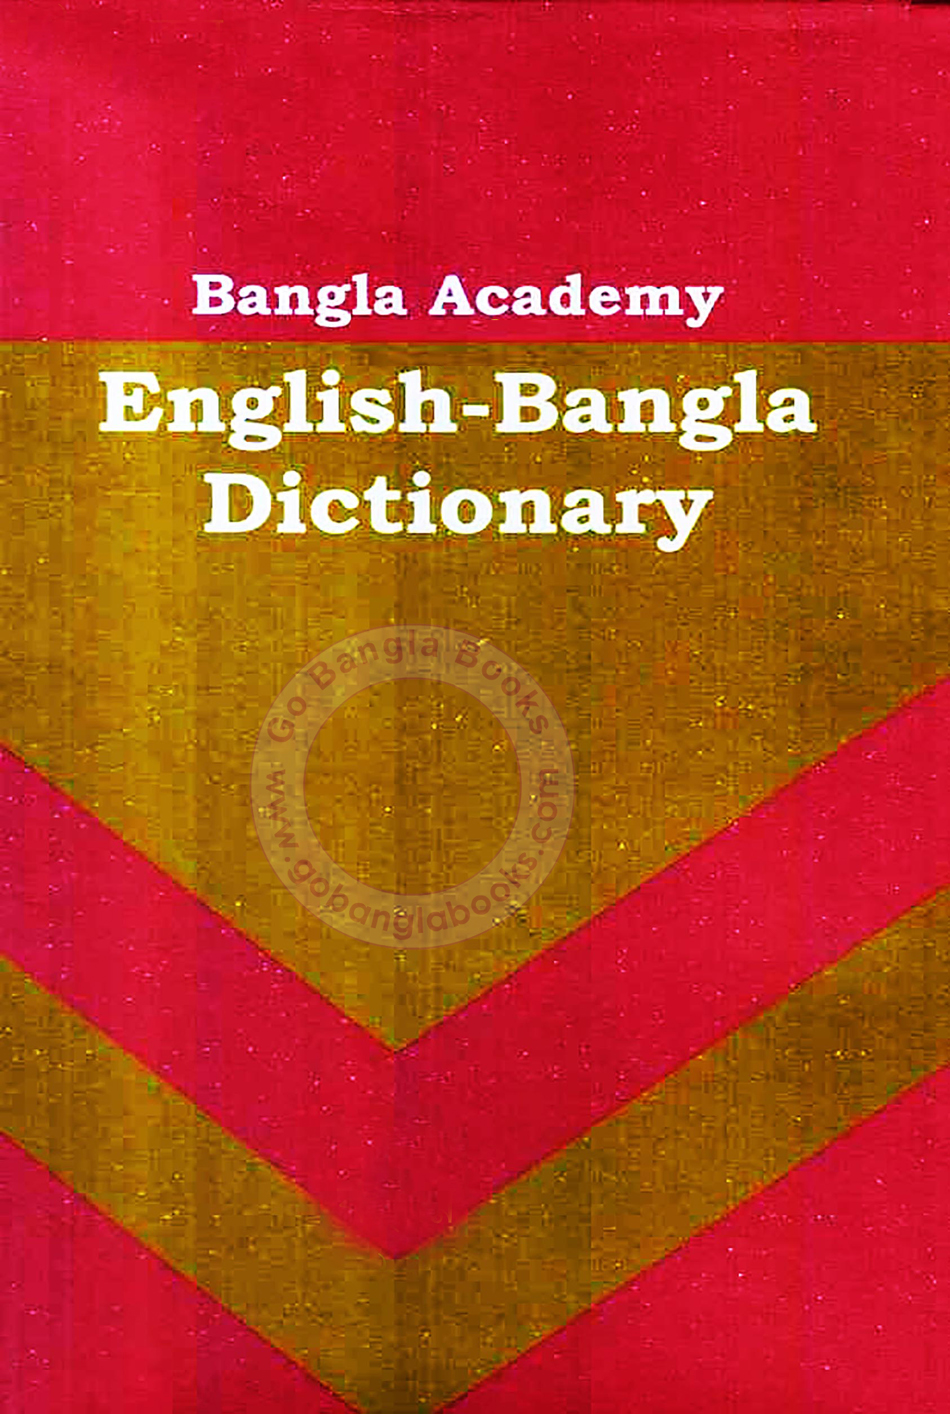 Free download bangla dictionary software